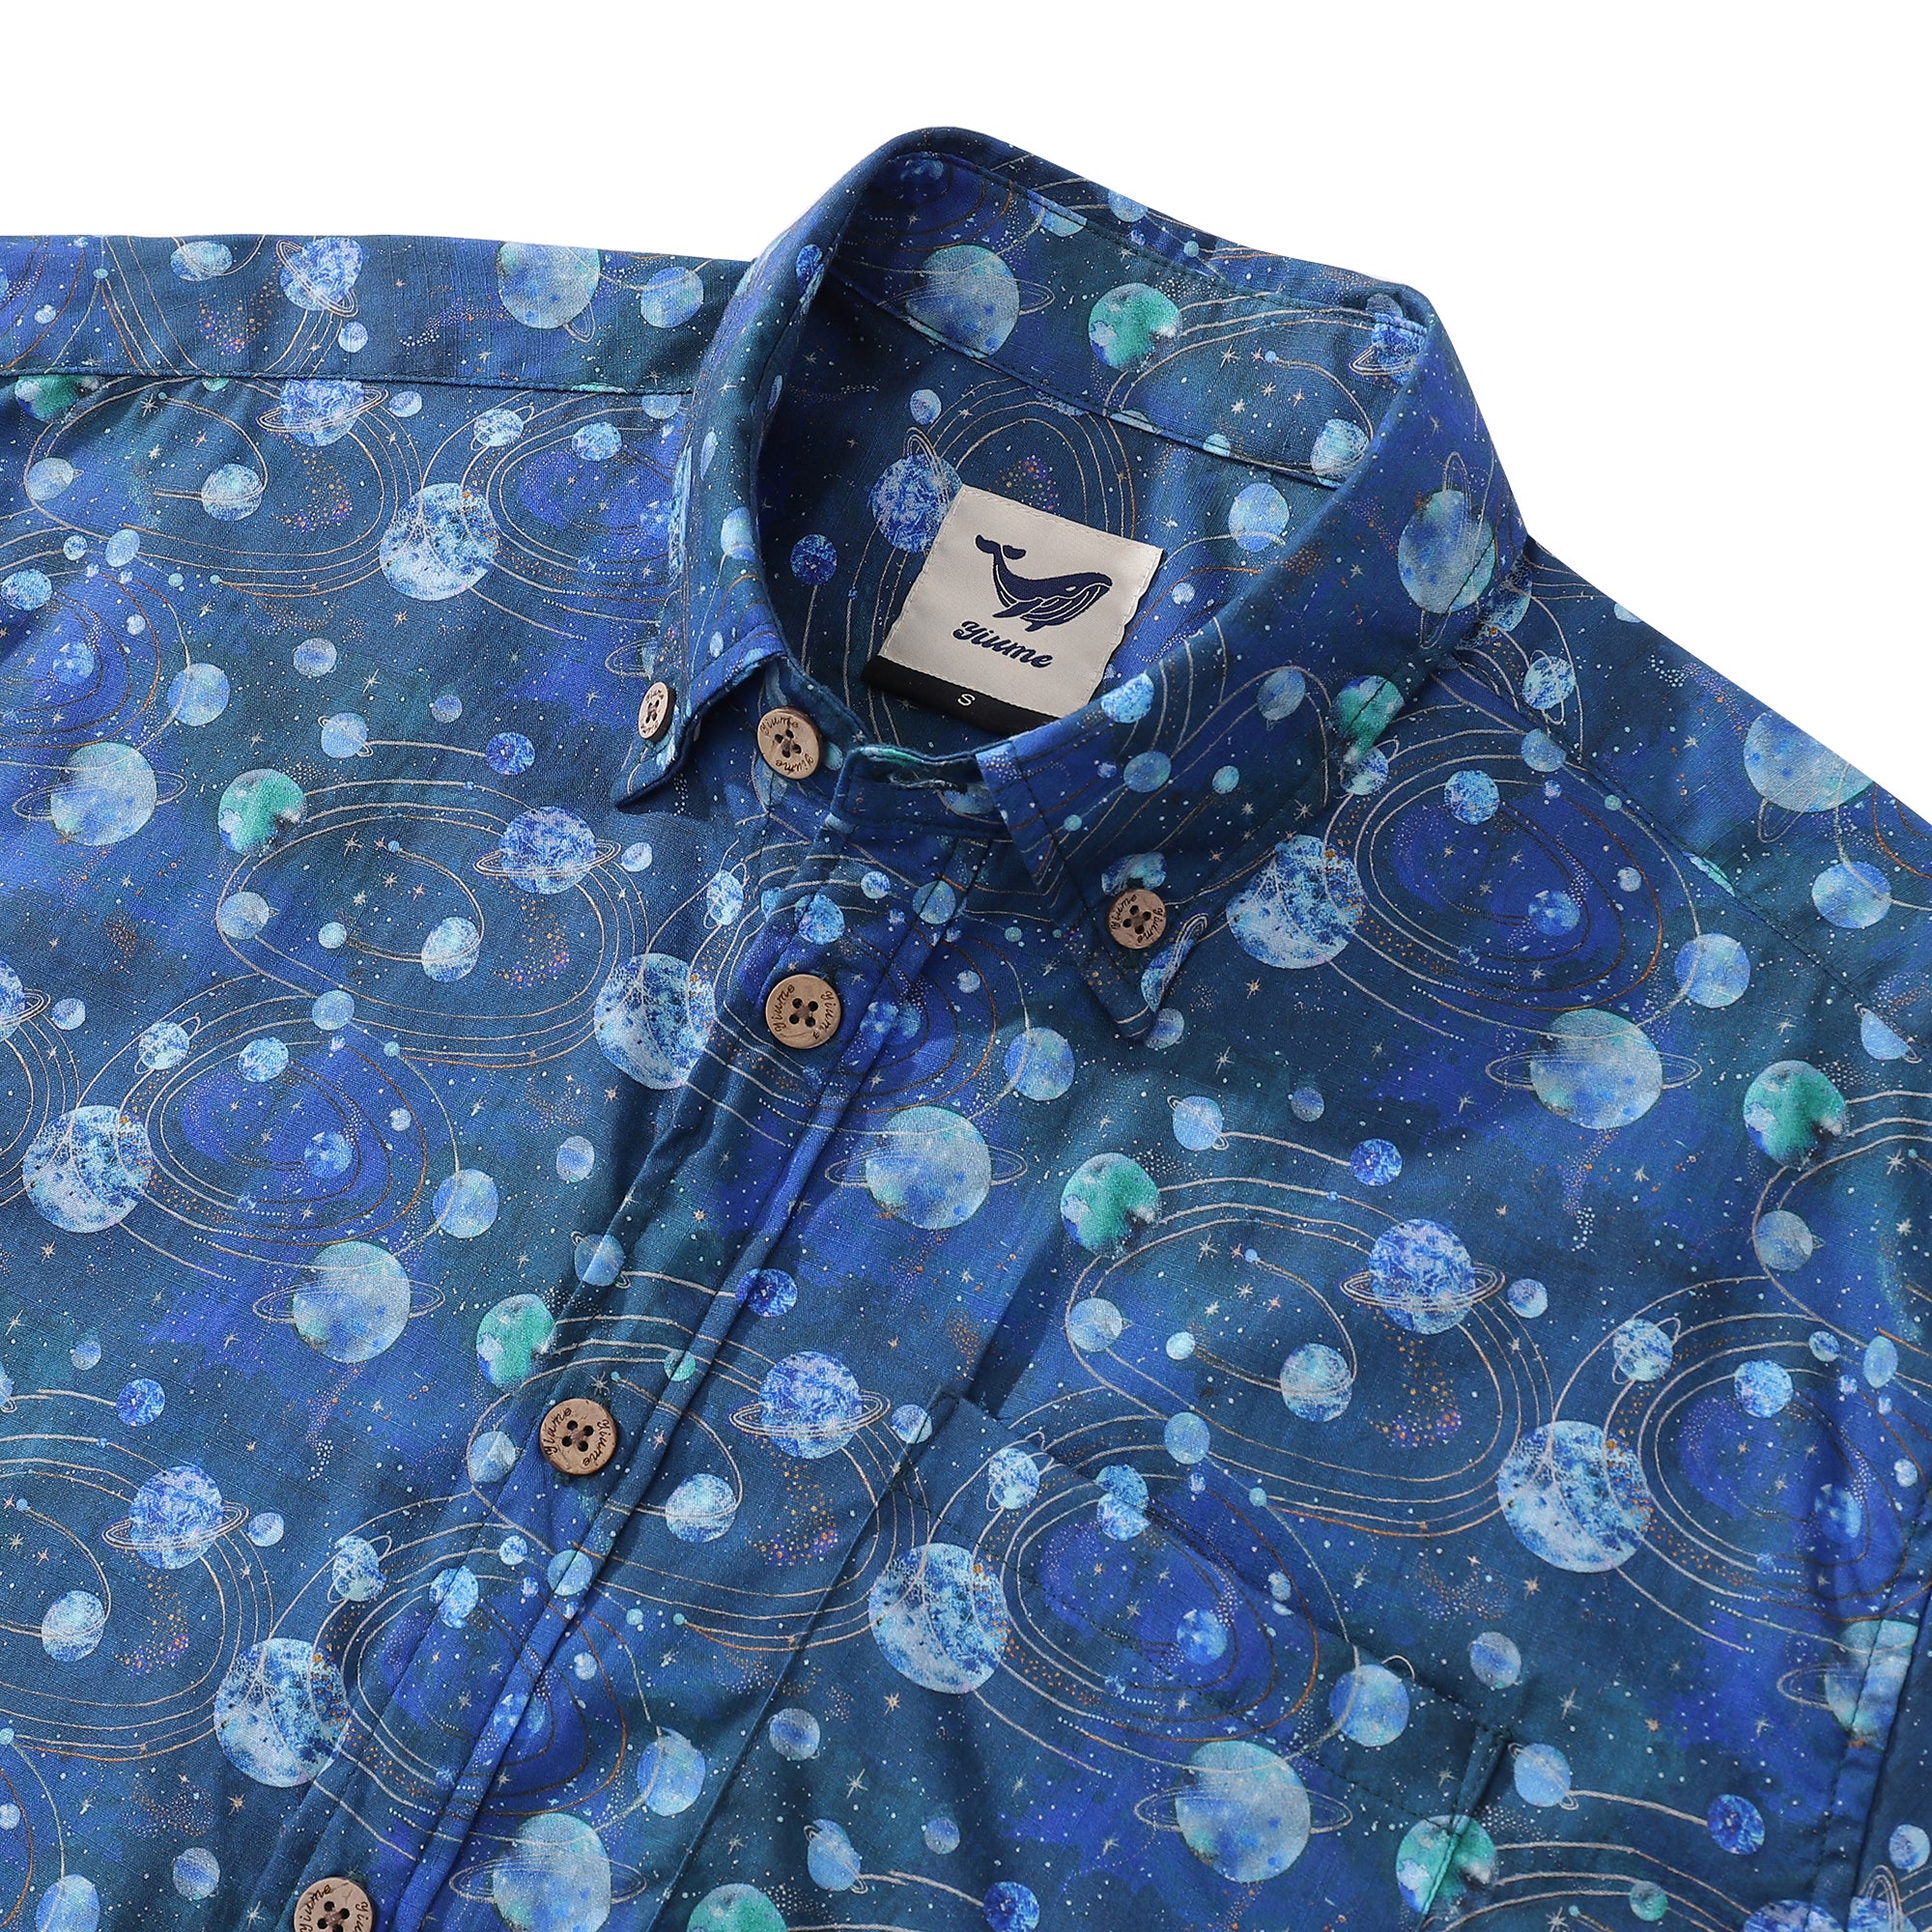 Men's Hawaiian Shirt Lost in Space By Catharina Edlund Cotton Button-down Short Sleeve Aloha Shirt